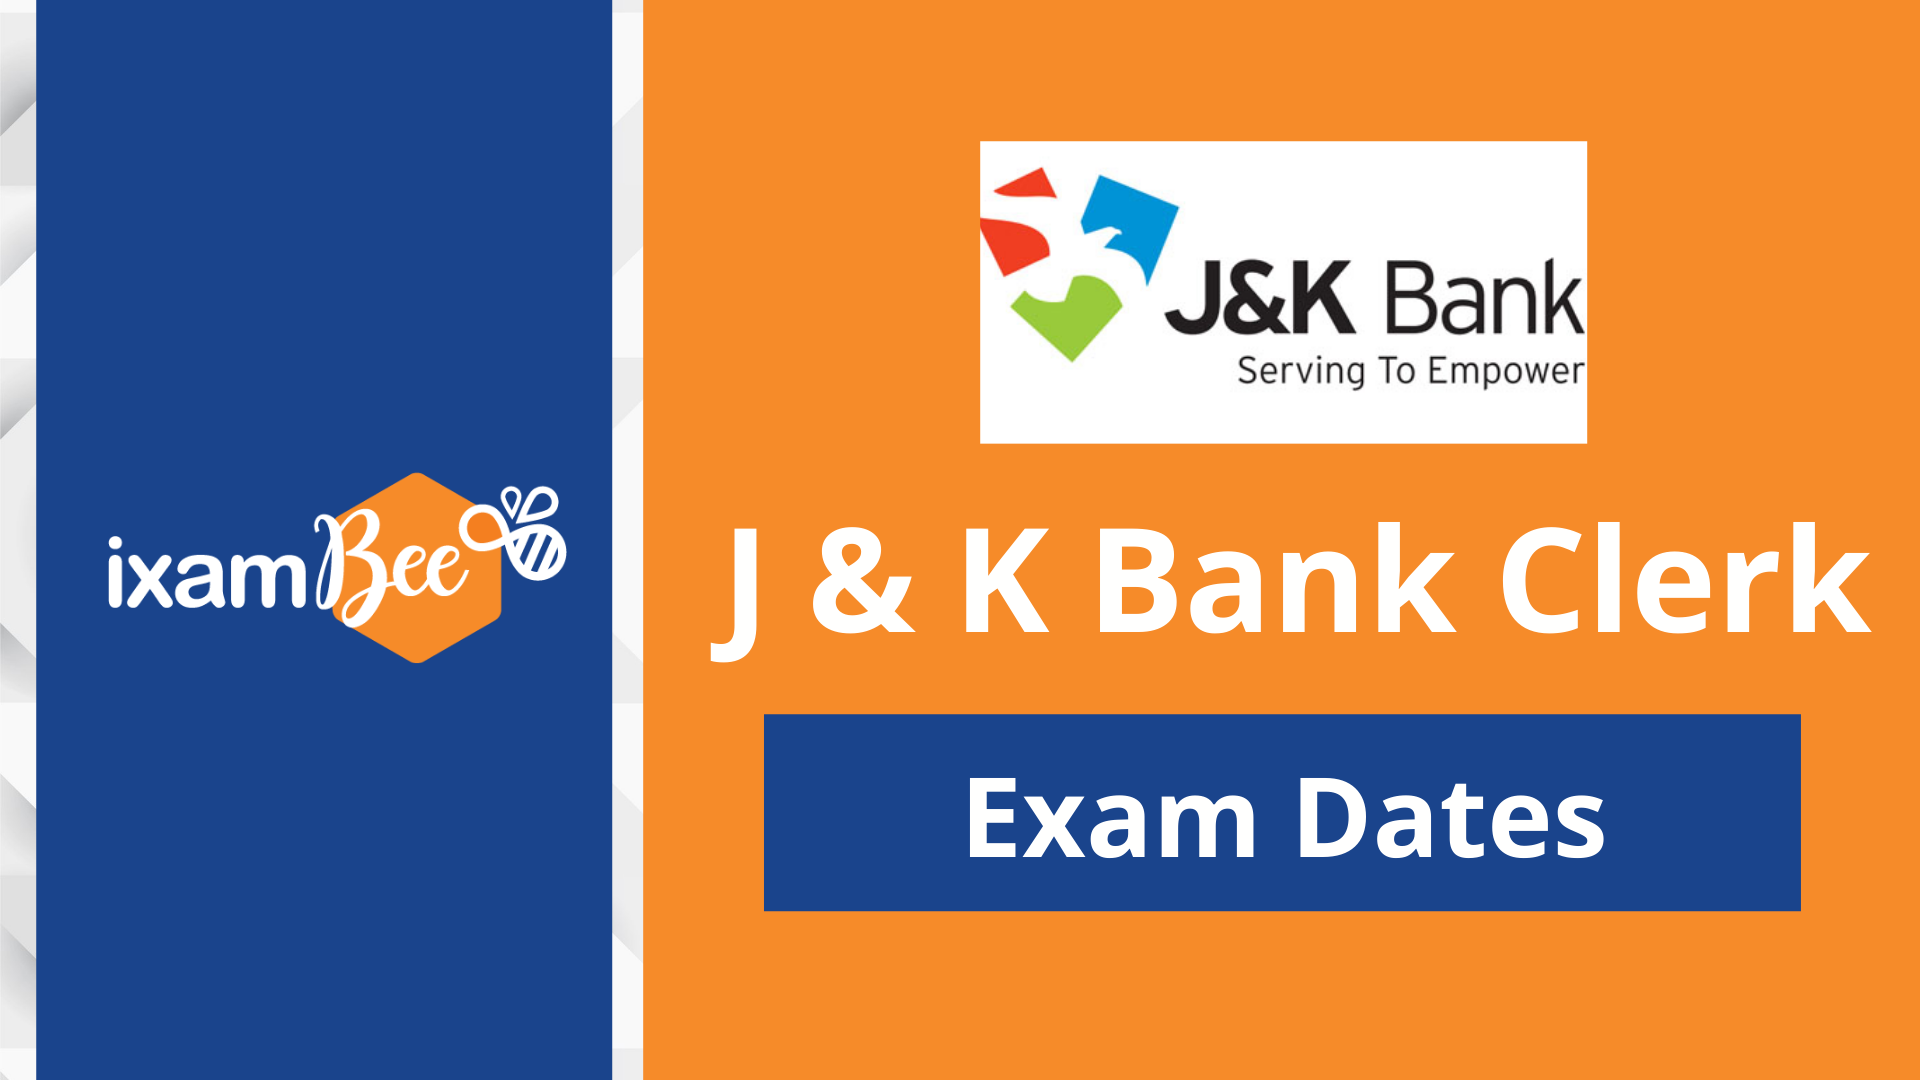 J&K Bank Clerk Exam Dates